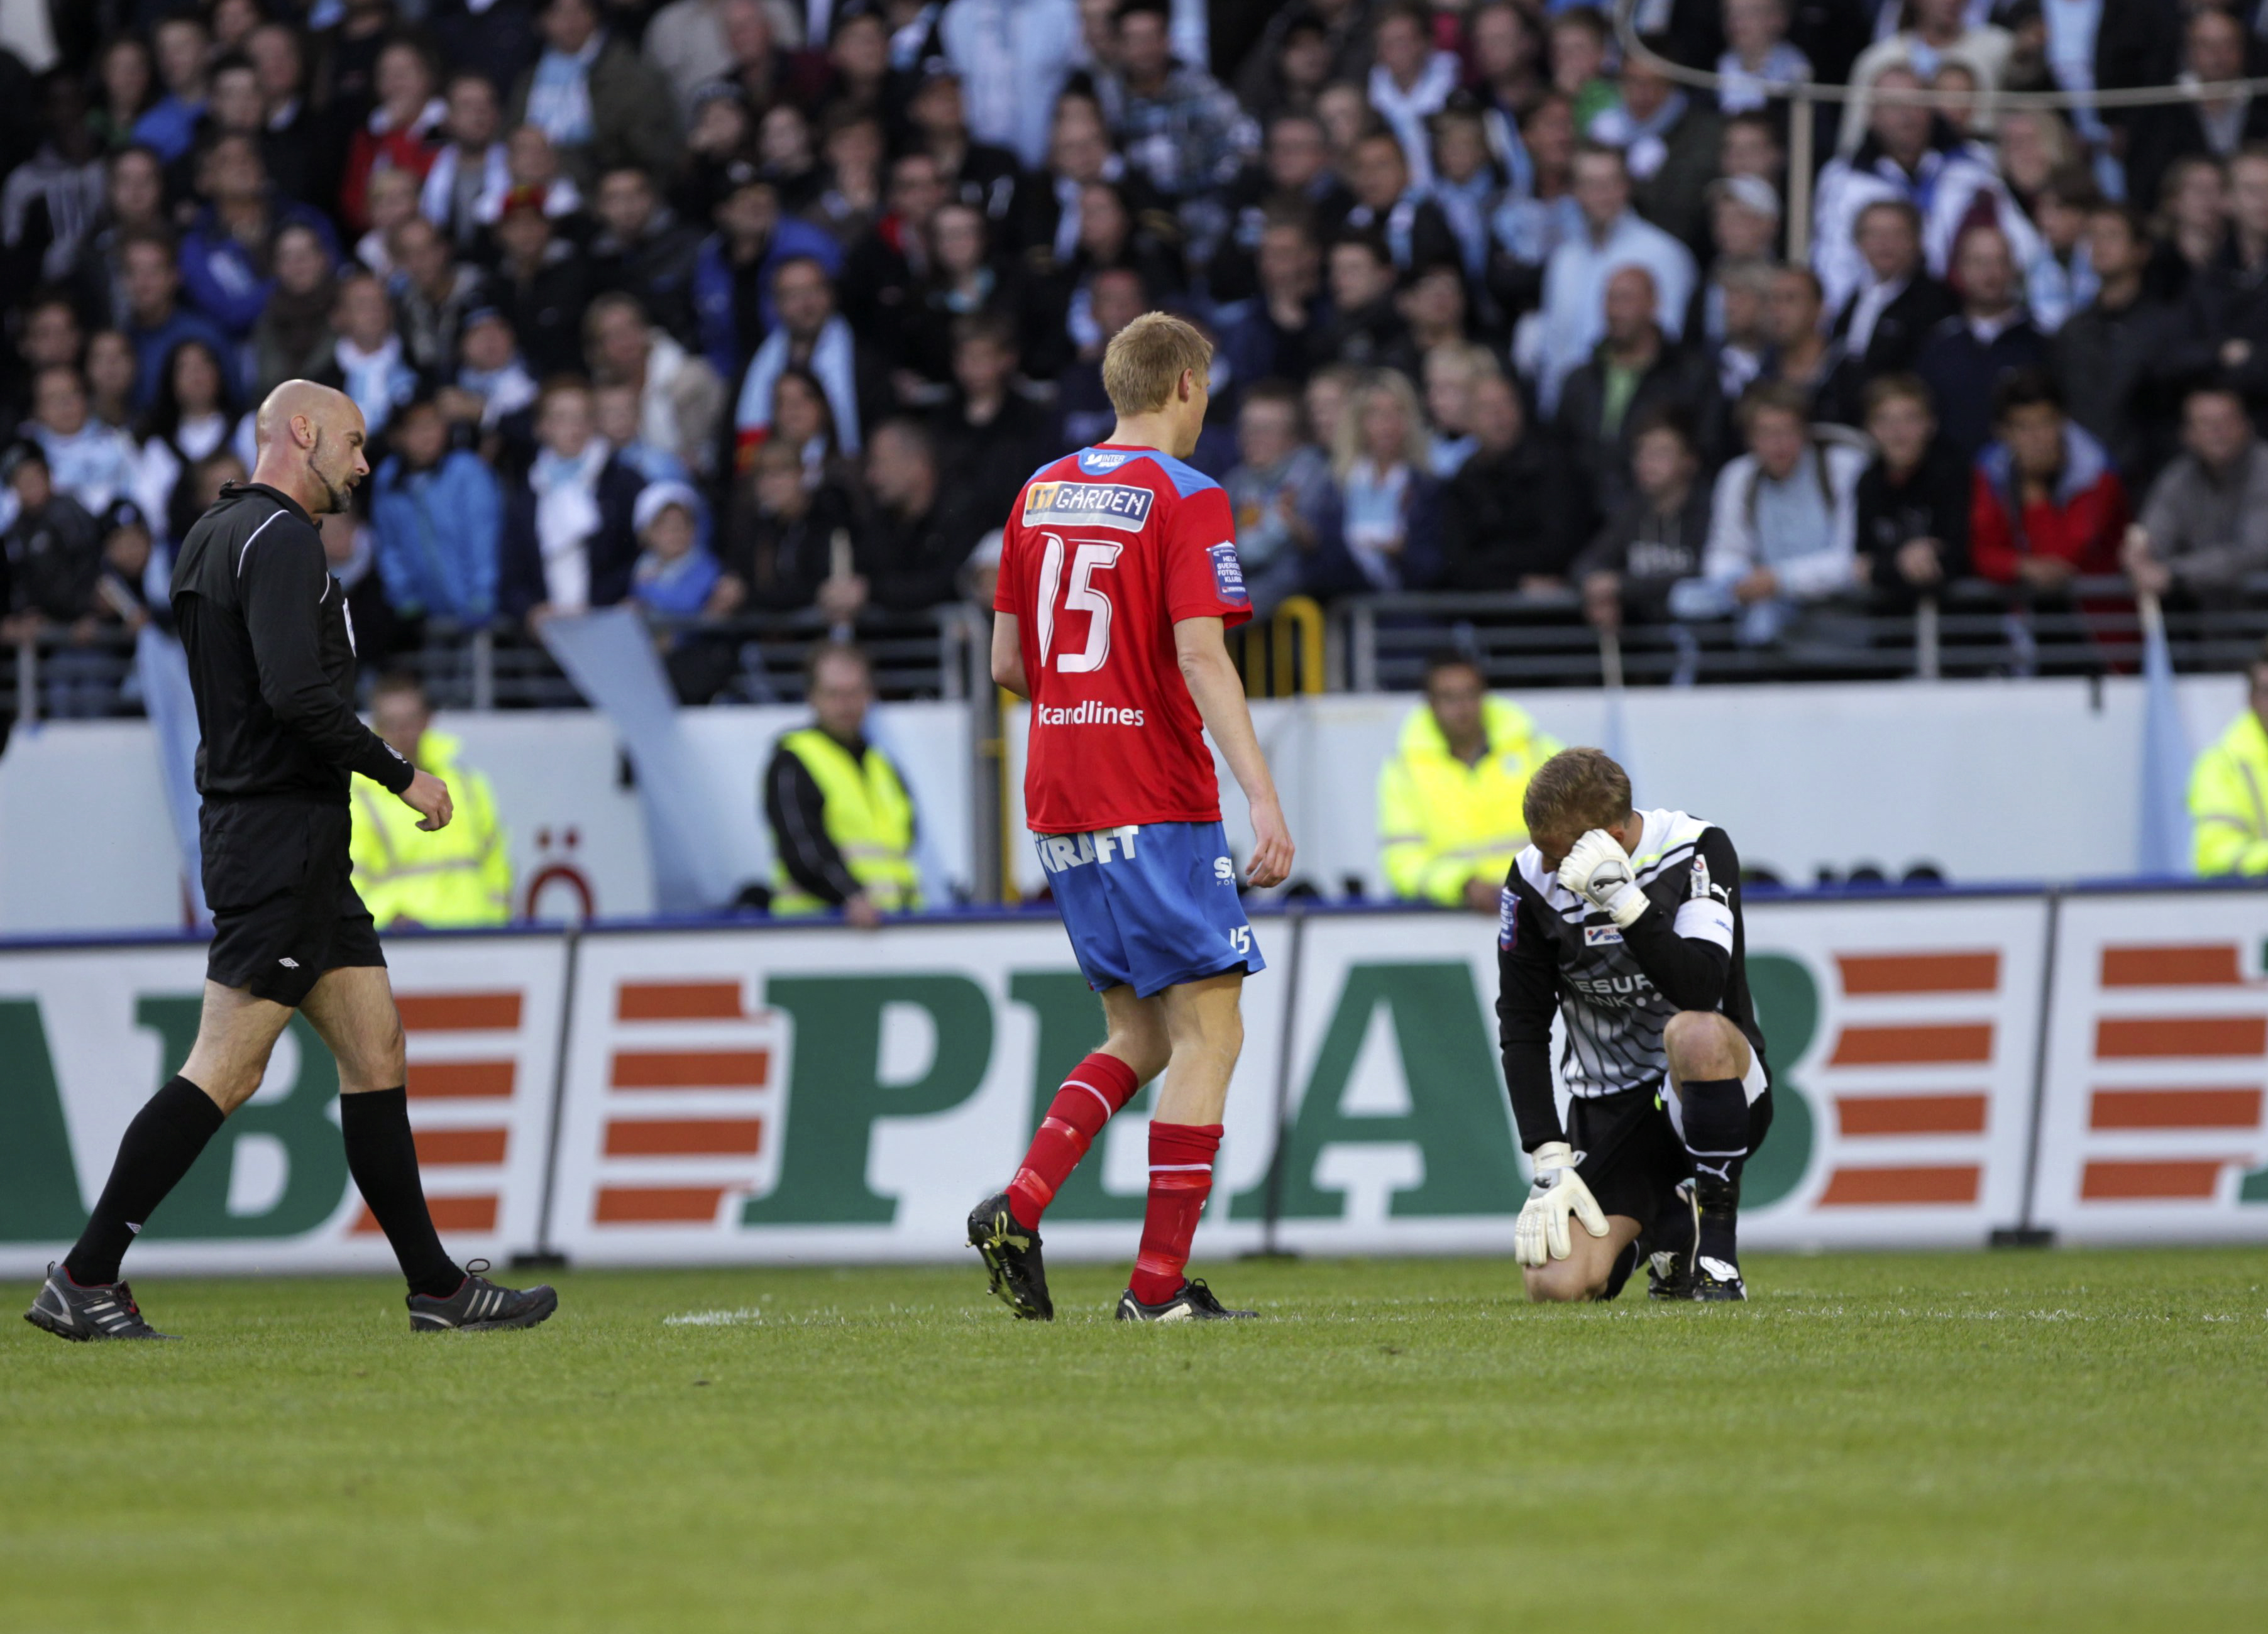 Fotboll, Malmö, Jonas Dahlquist, Johan Widell, Derby, Supporter